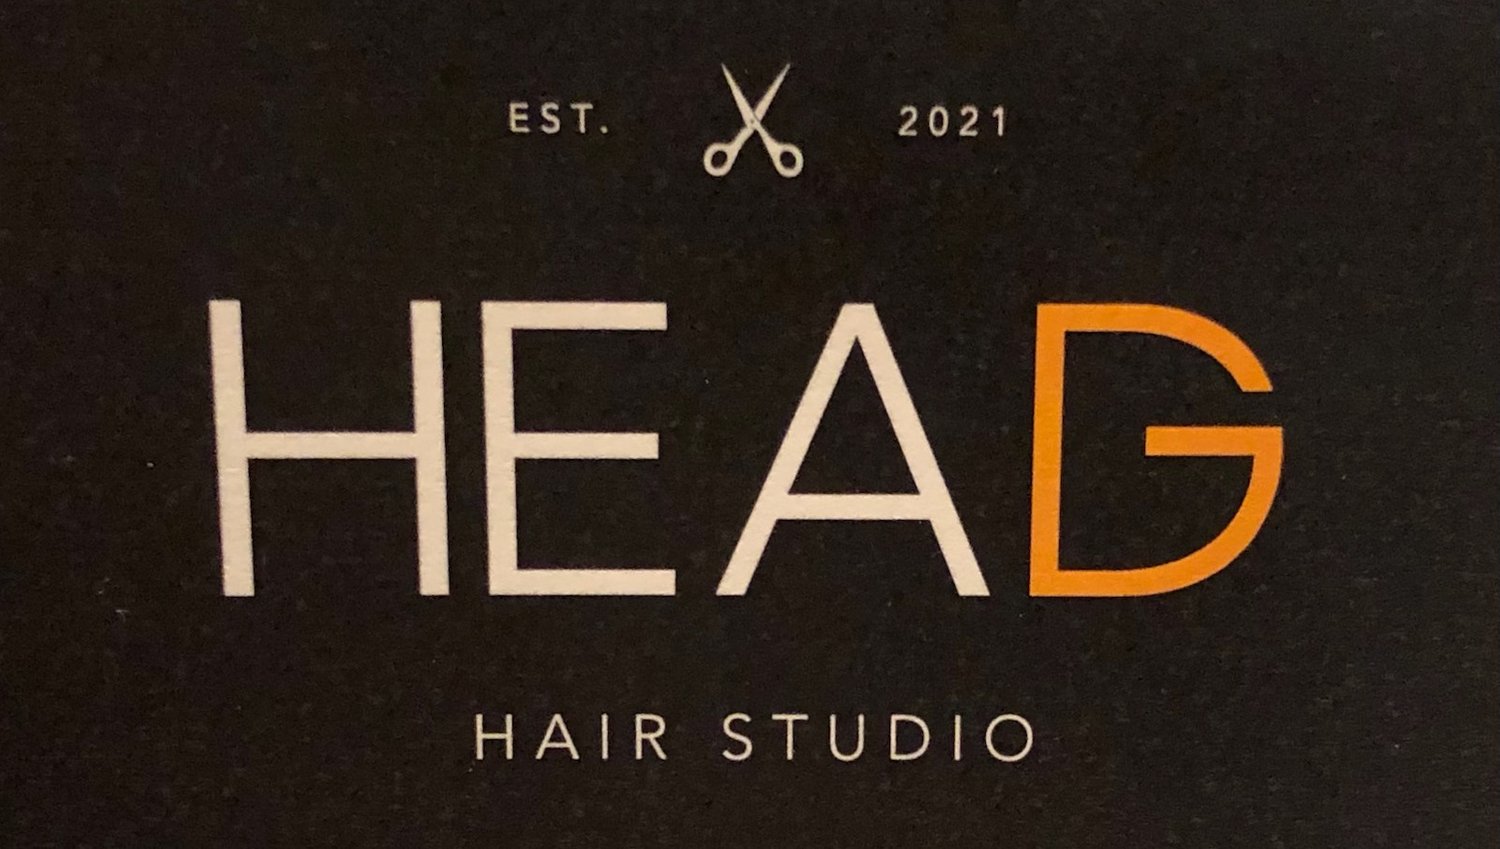 HEADG Hair Studio